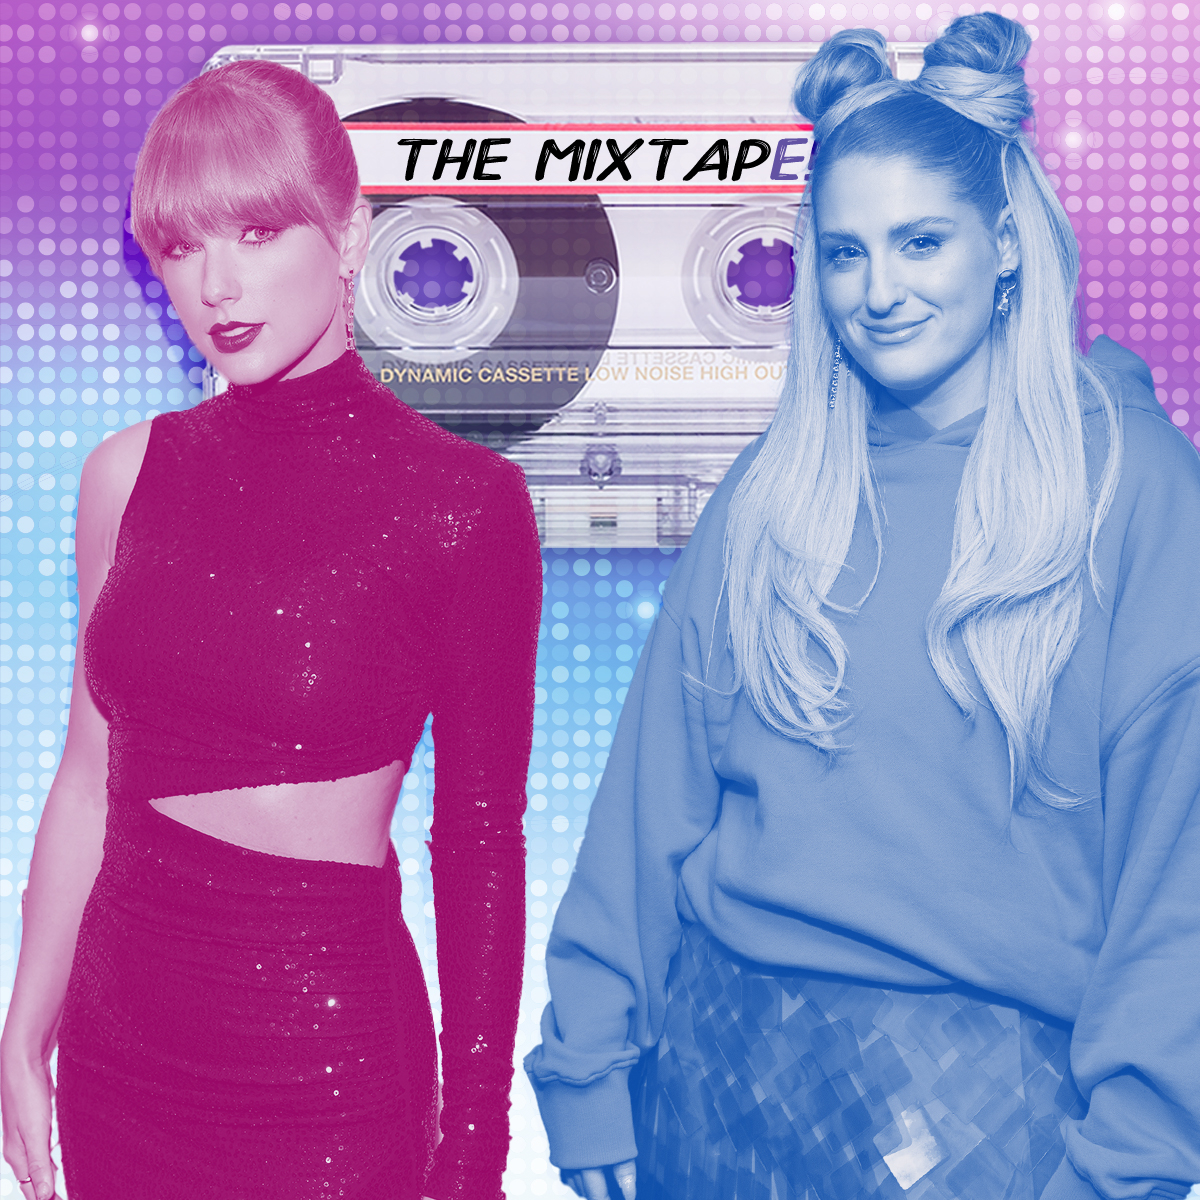 Meghan Trainor, Not Taylor Swift, Has the Best Pop Music Now